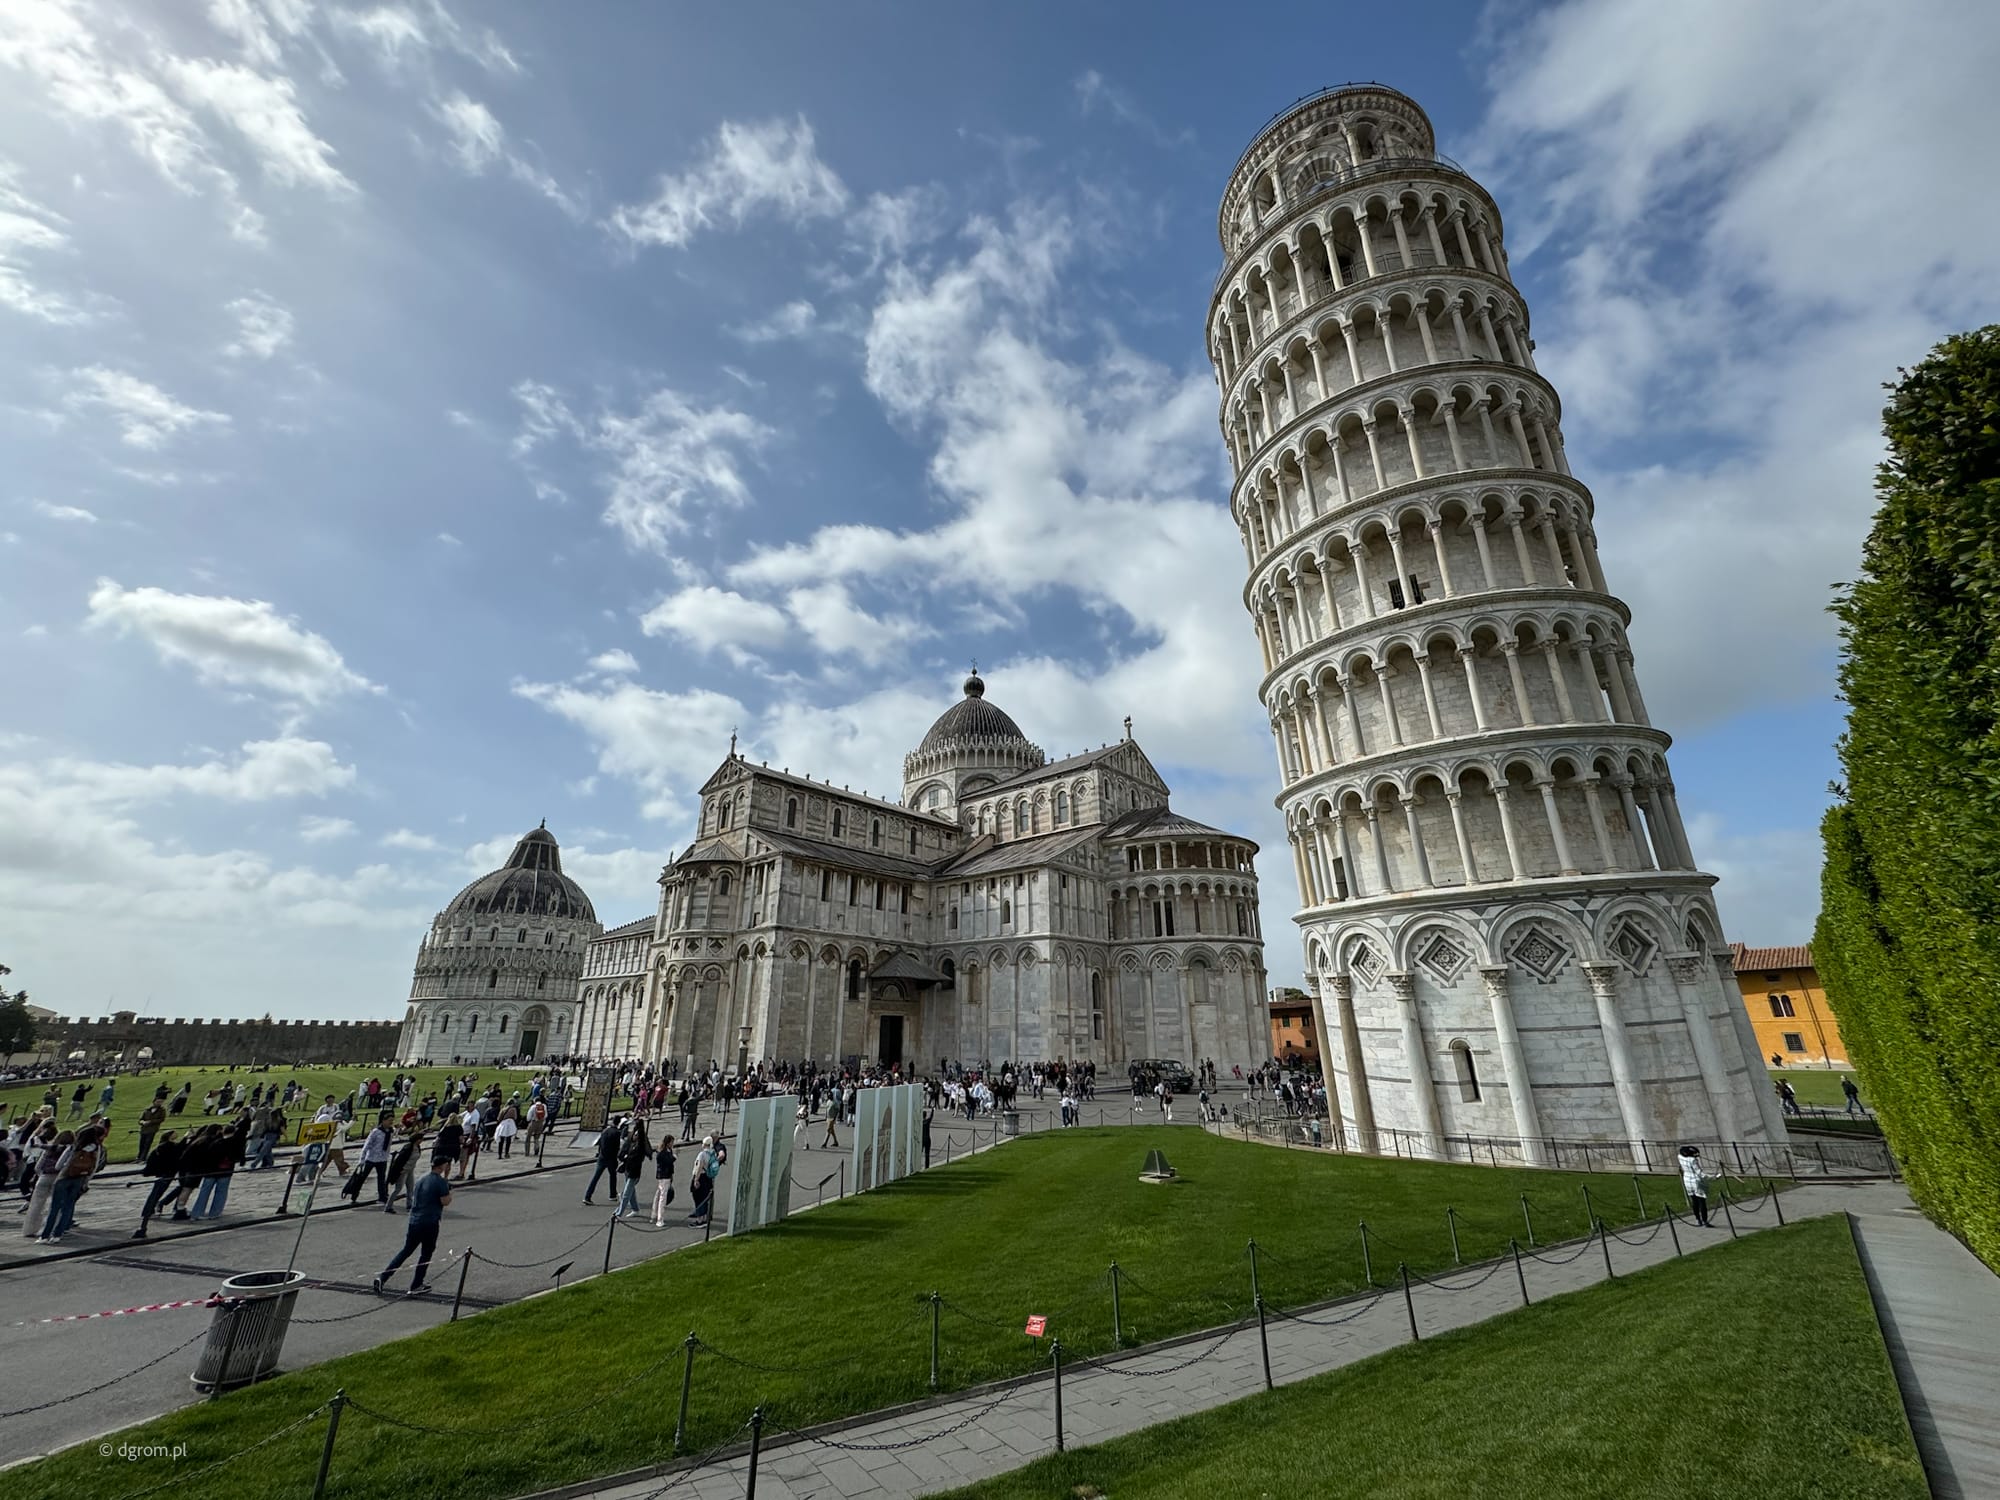 Wieża - ta krzywa ( Pisa )